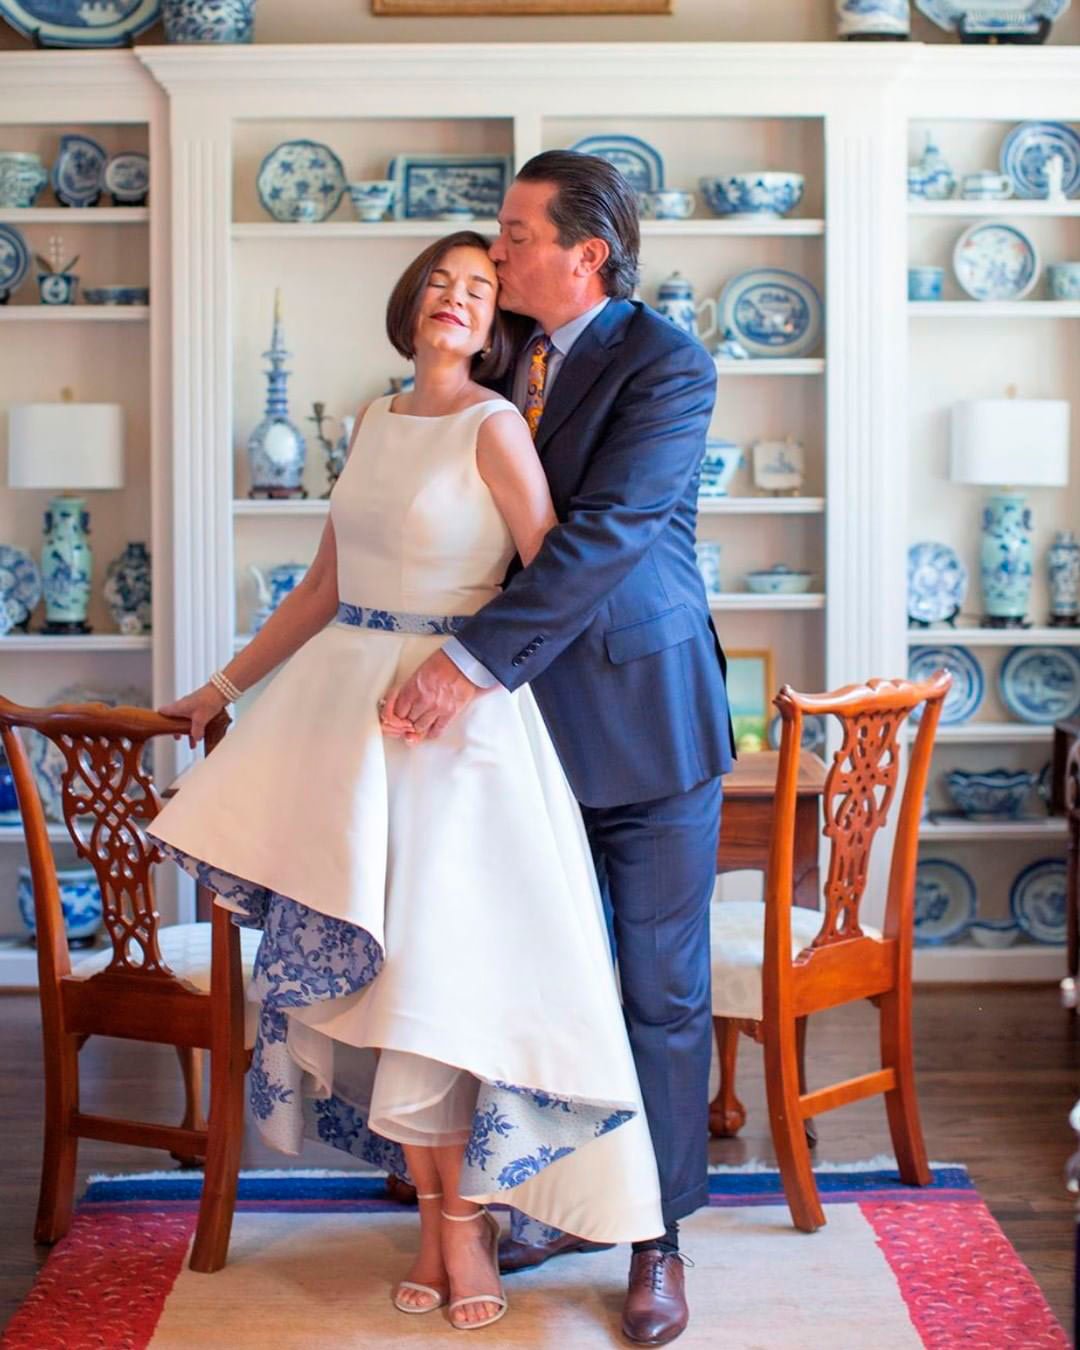 blue and white wedding colors bride attire dress